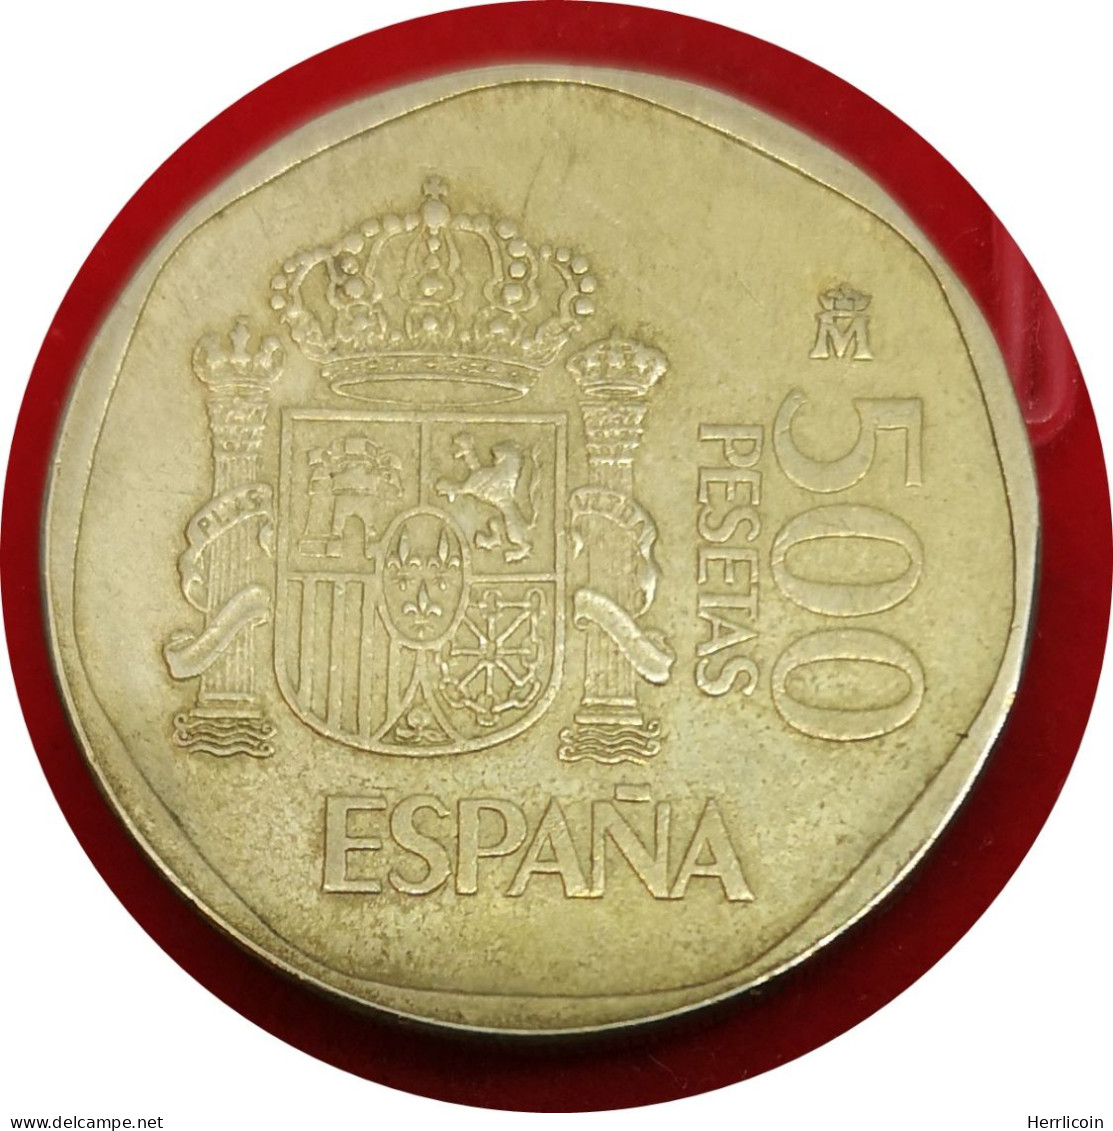 Monnaie Espagne - 1989 - 500 Pesetas Juan Carlos I - 500 Peseta